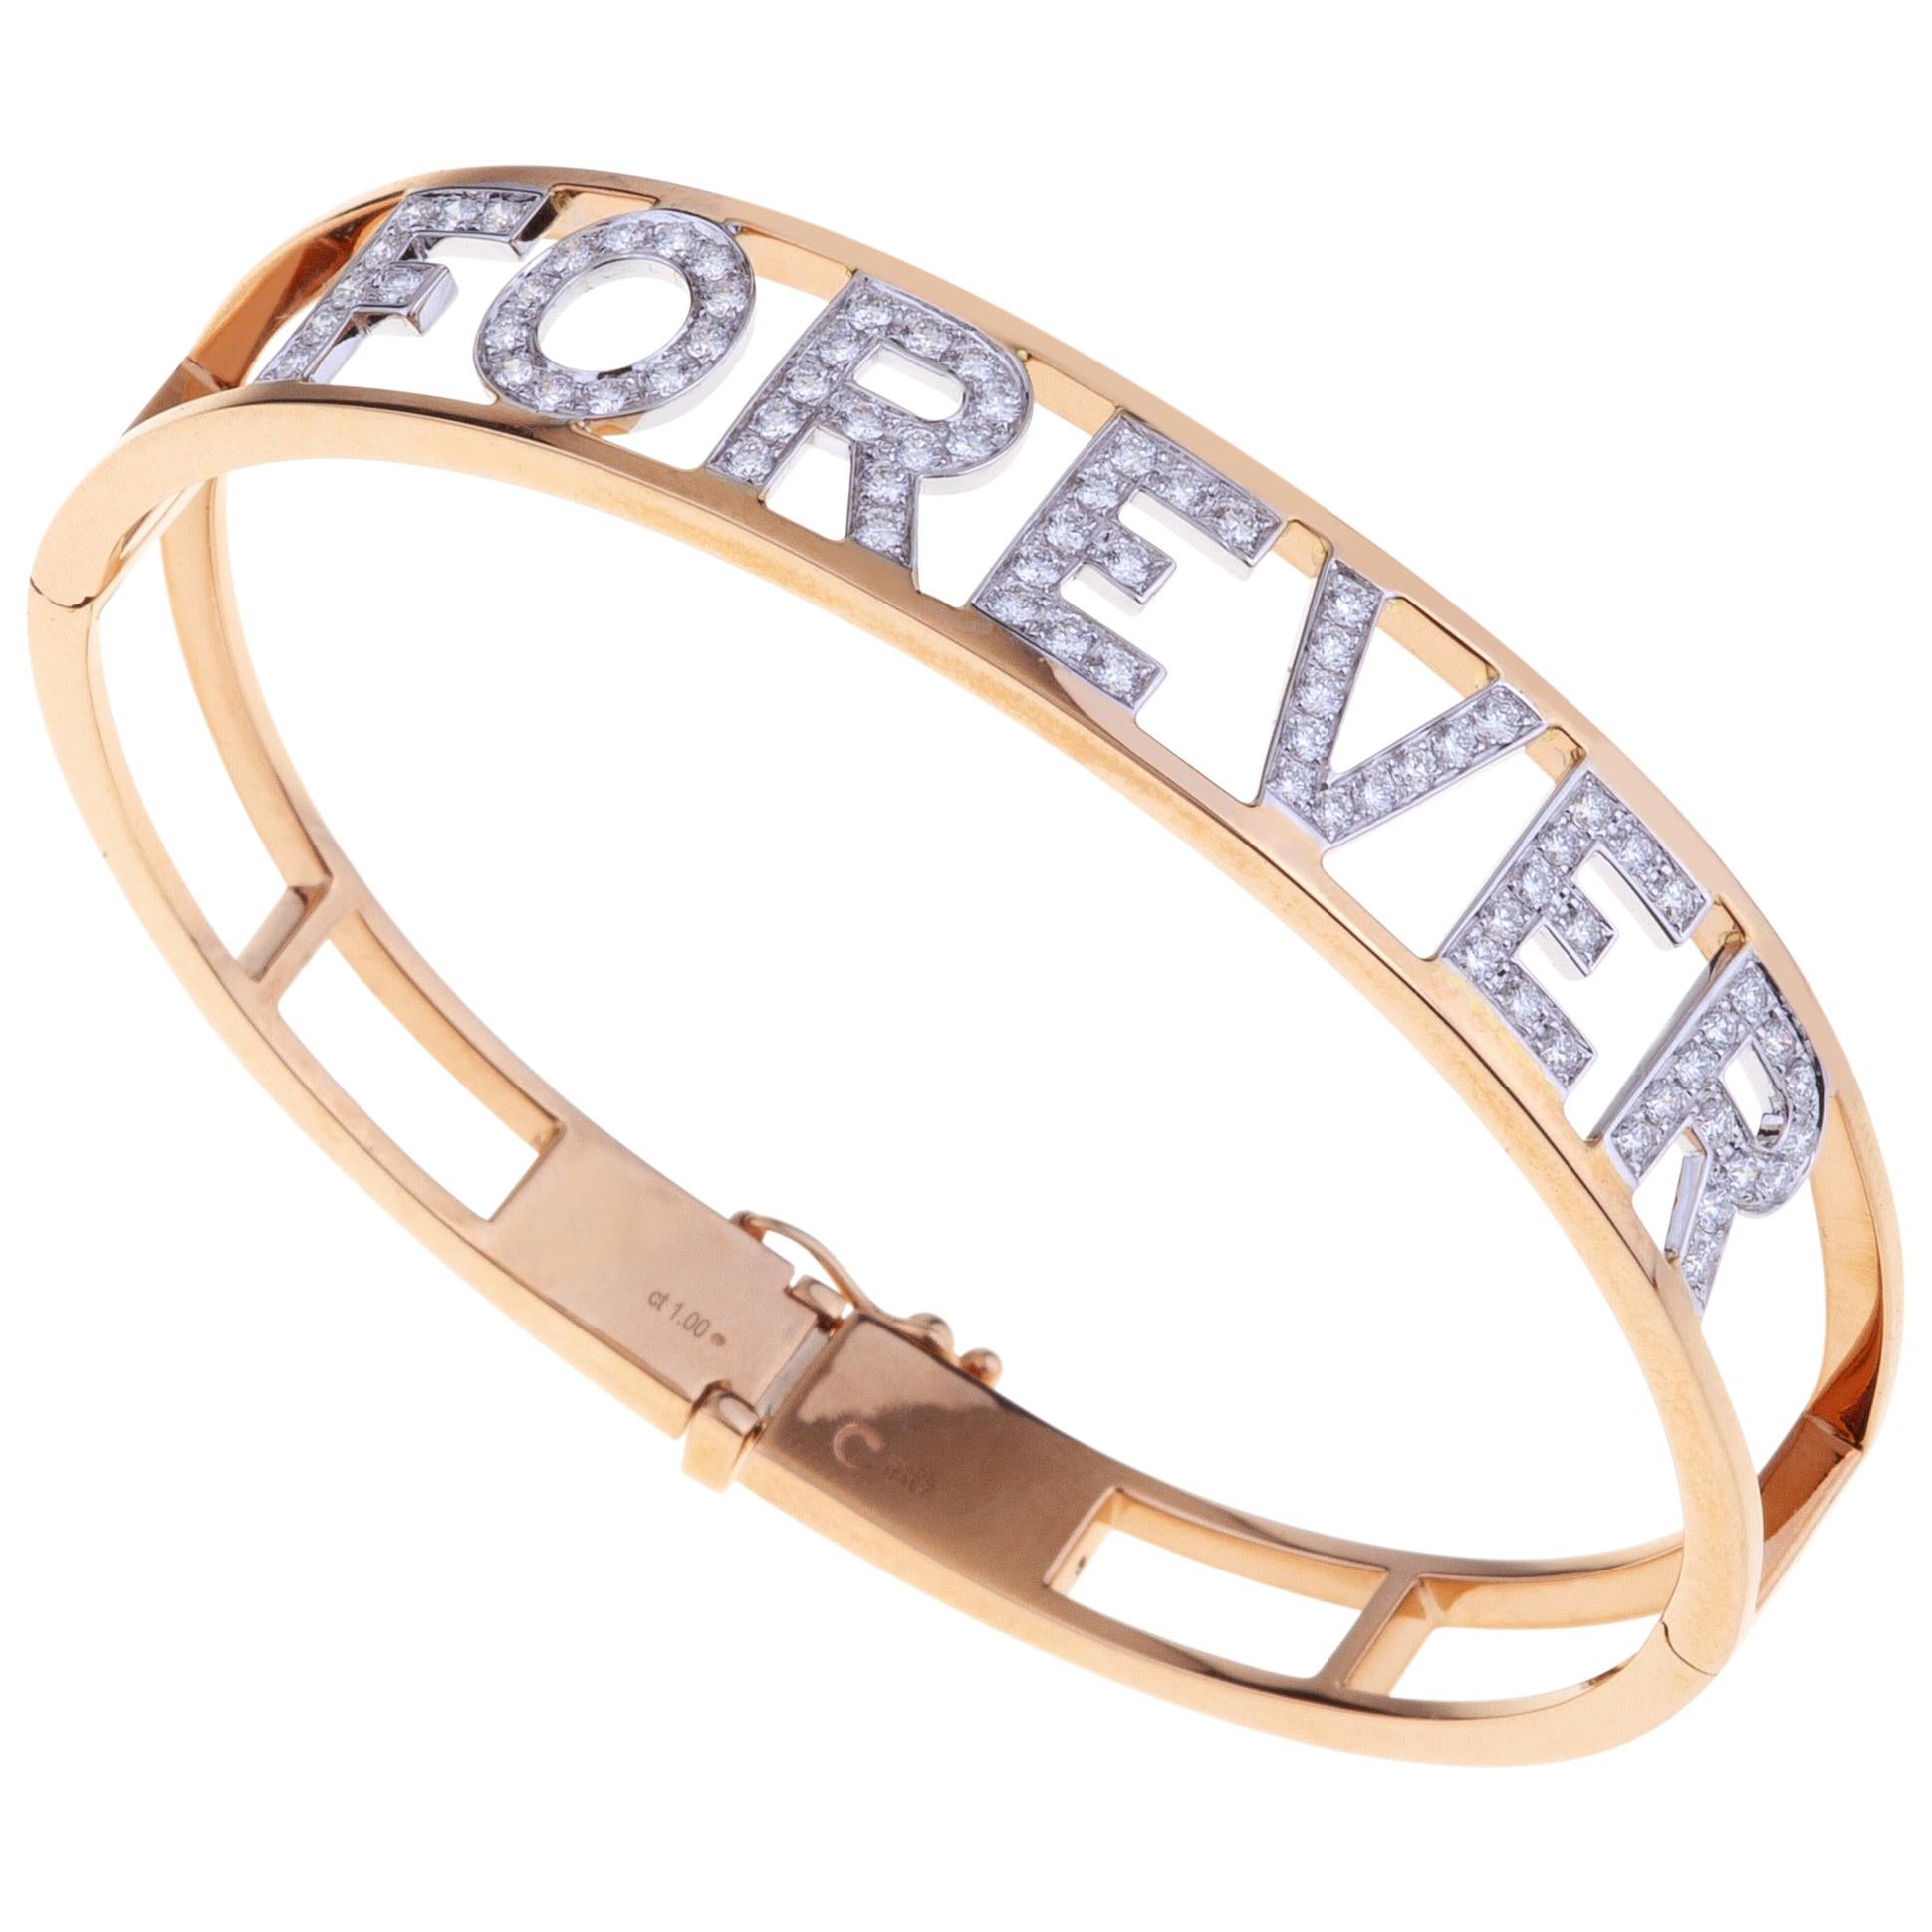 "FOREVER" Gold Bangle Bracelet with Diamonds